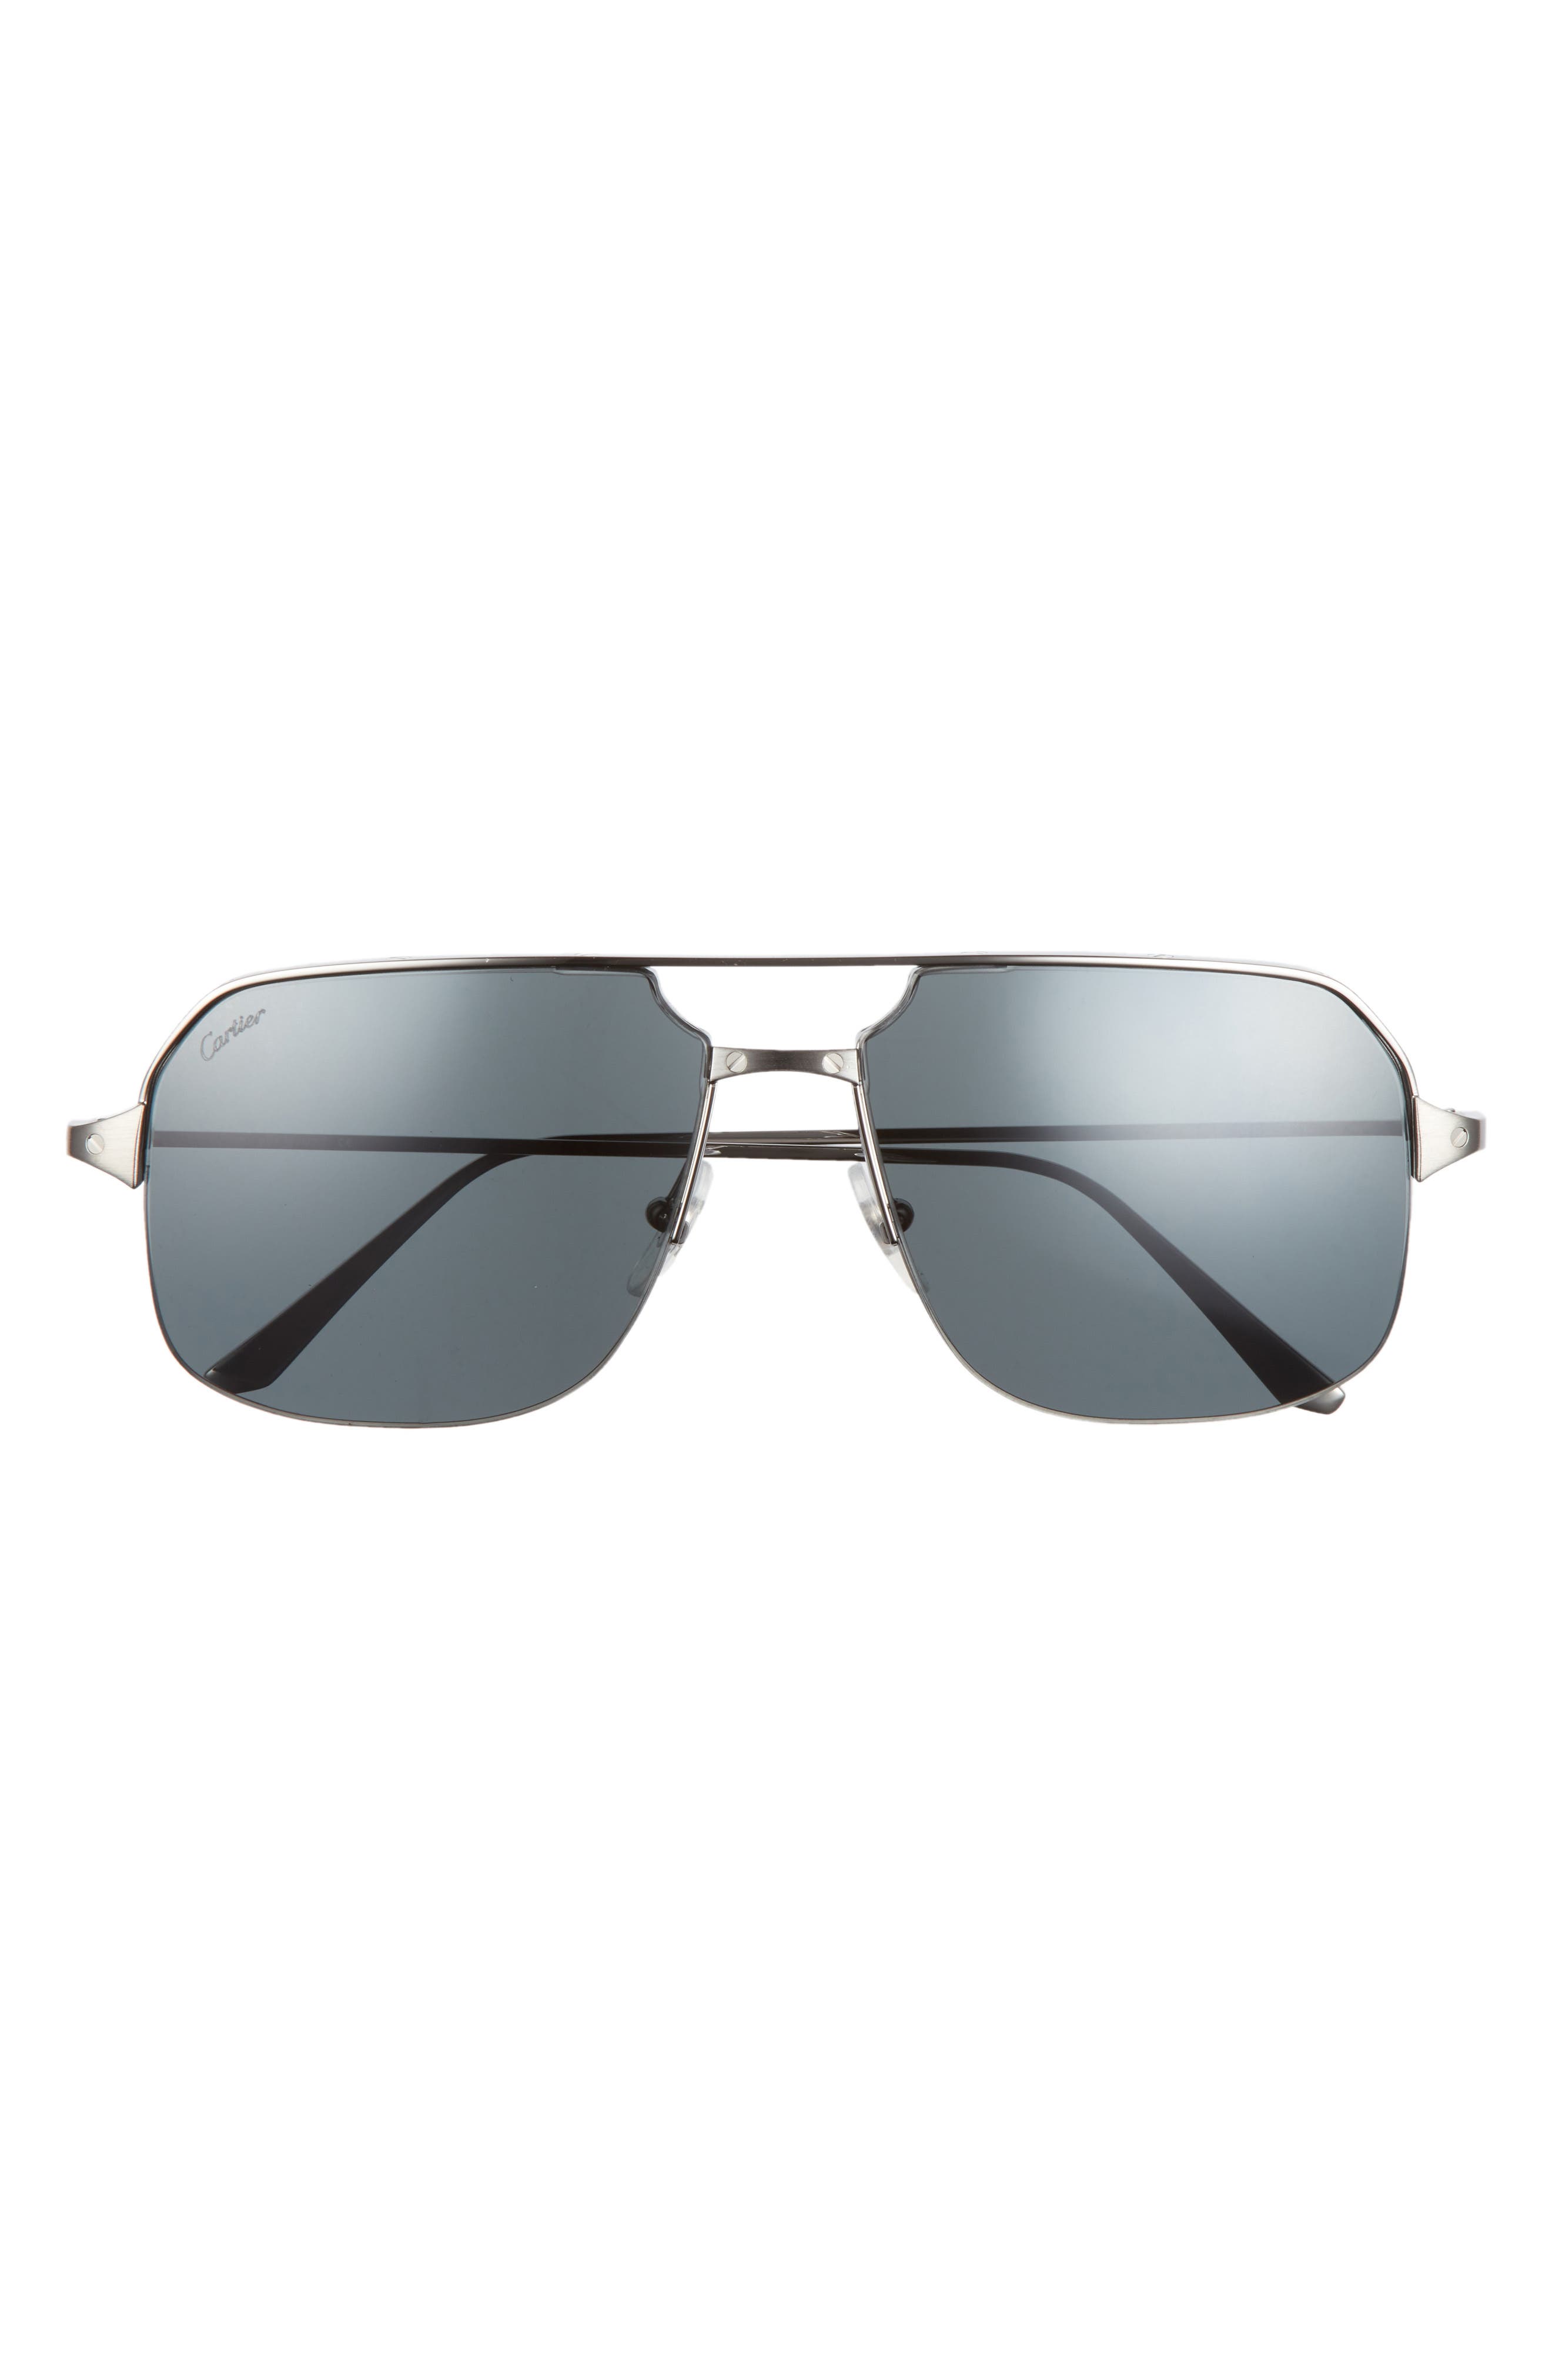 Cartier 60mm Oversize Aviator Sunglasses in Ruthenium at Nordstrom